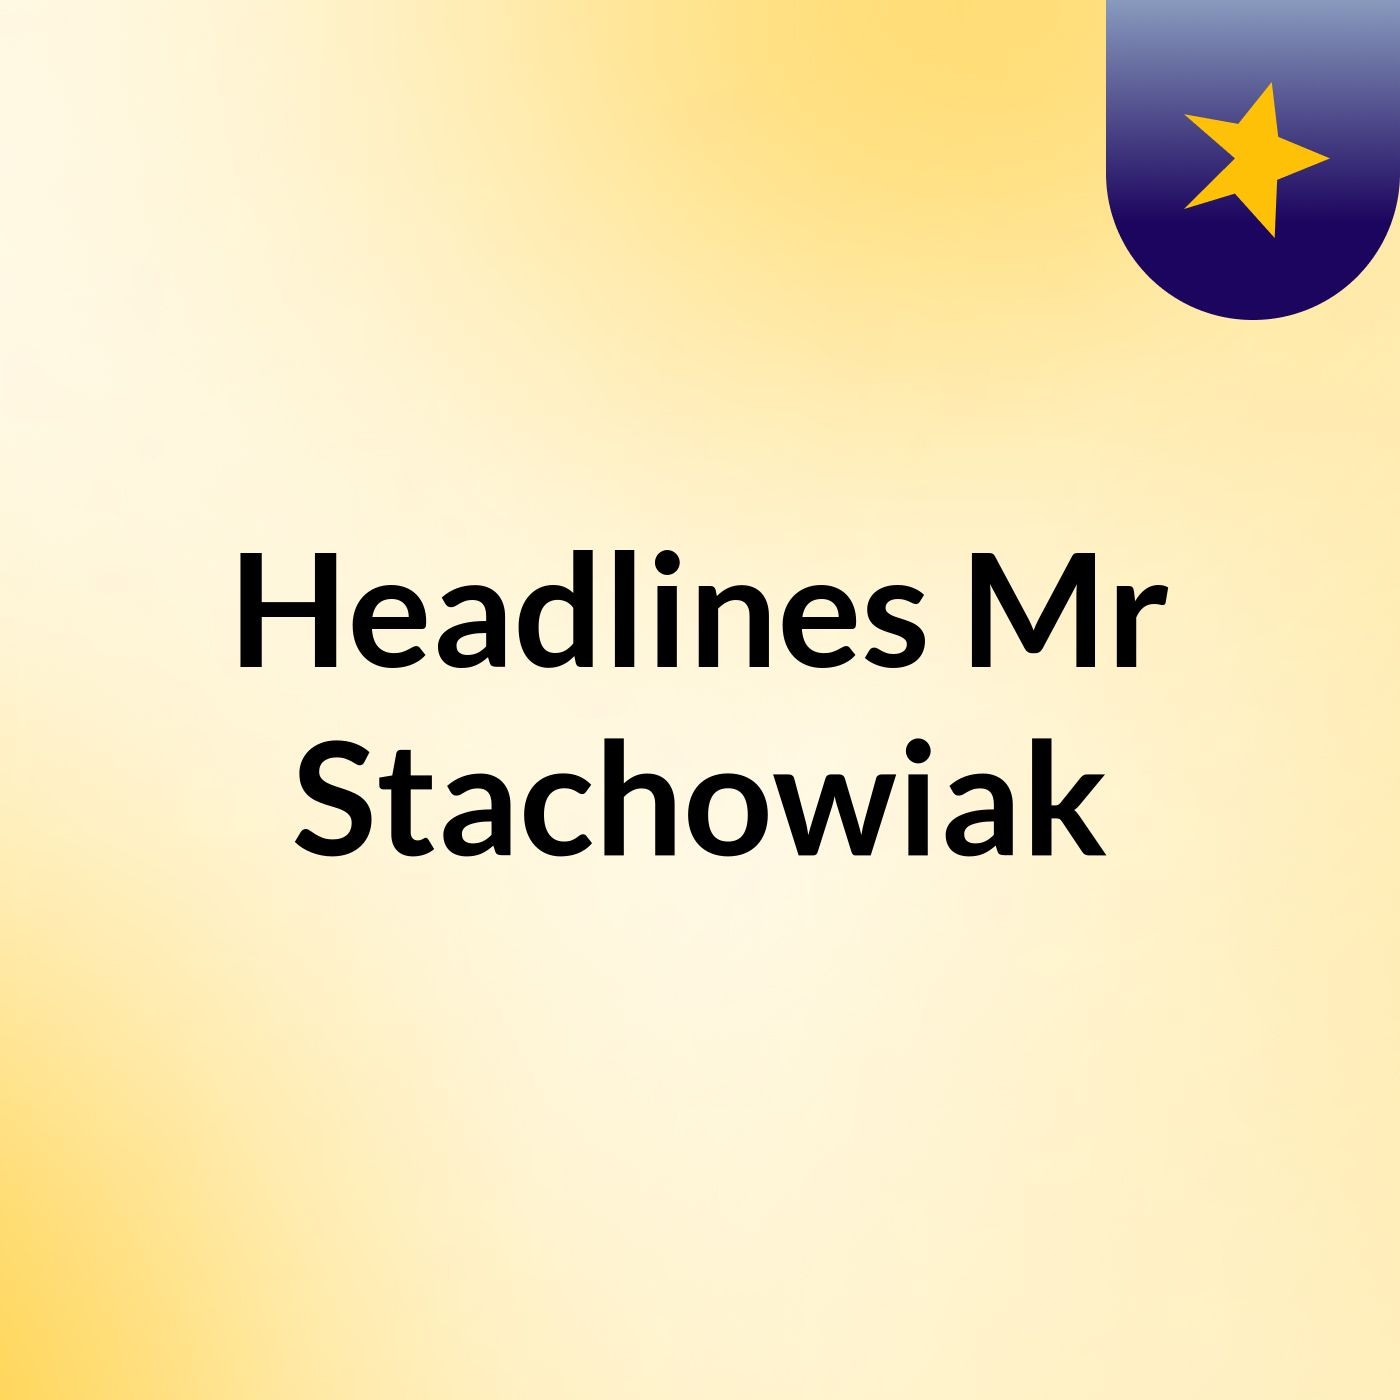 Episode 50 - Headlines Mr Stachowiak